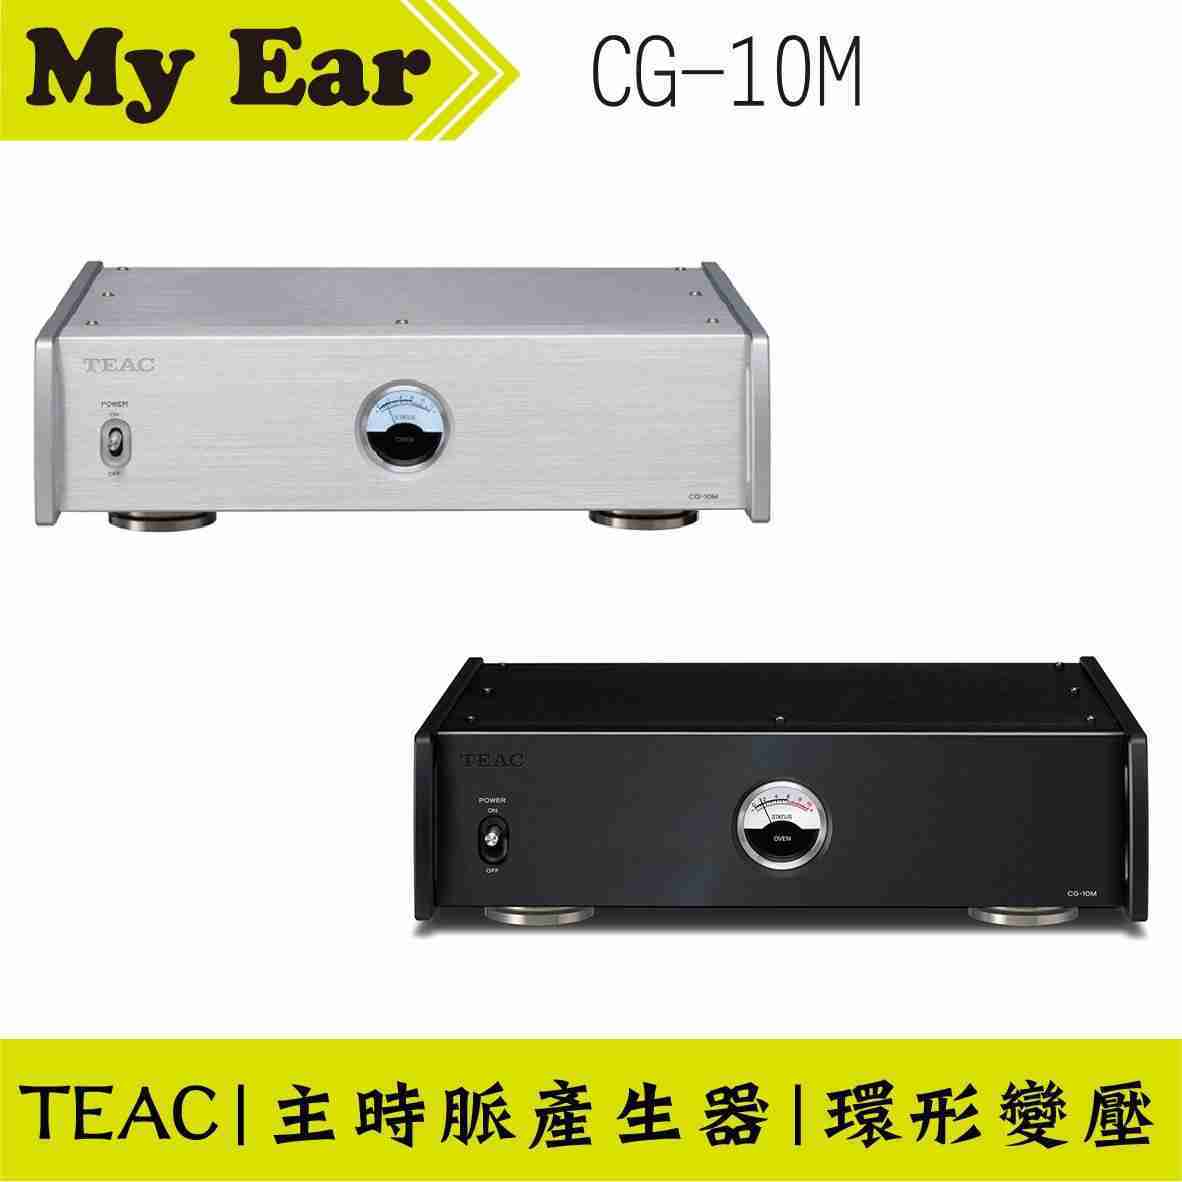 TEAC CG-10M 主時脈產生器 雙色可選 | My Ear 耳機專門店